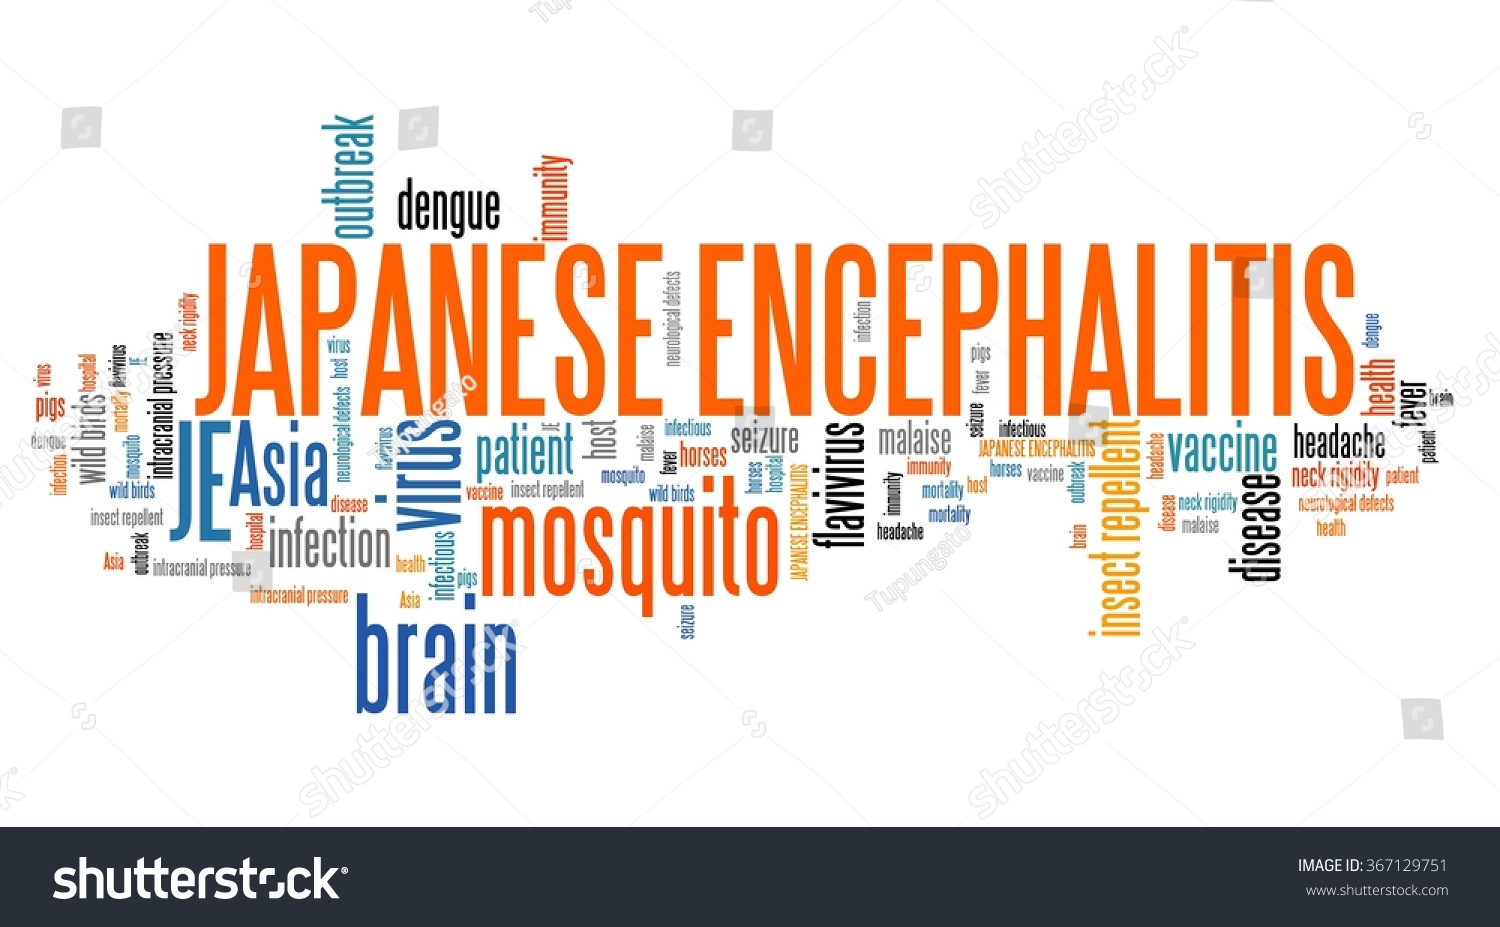 Japanese Encephalitis - Mosquito Borne Virus Disease. Word Cloud